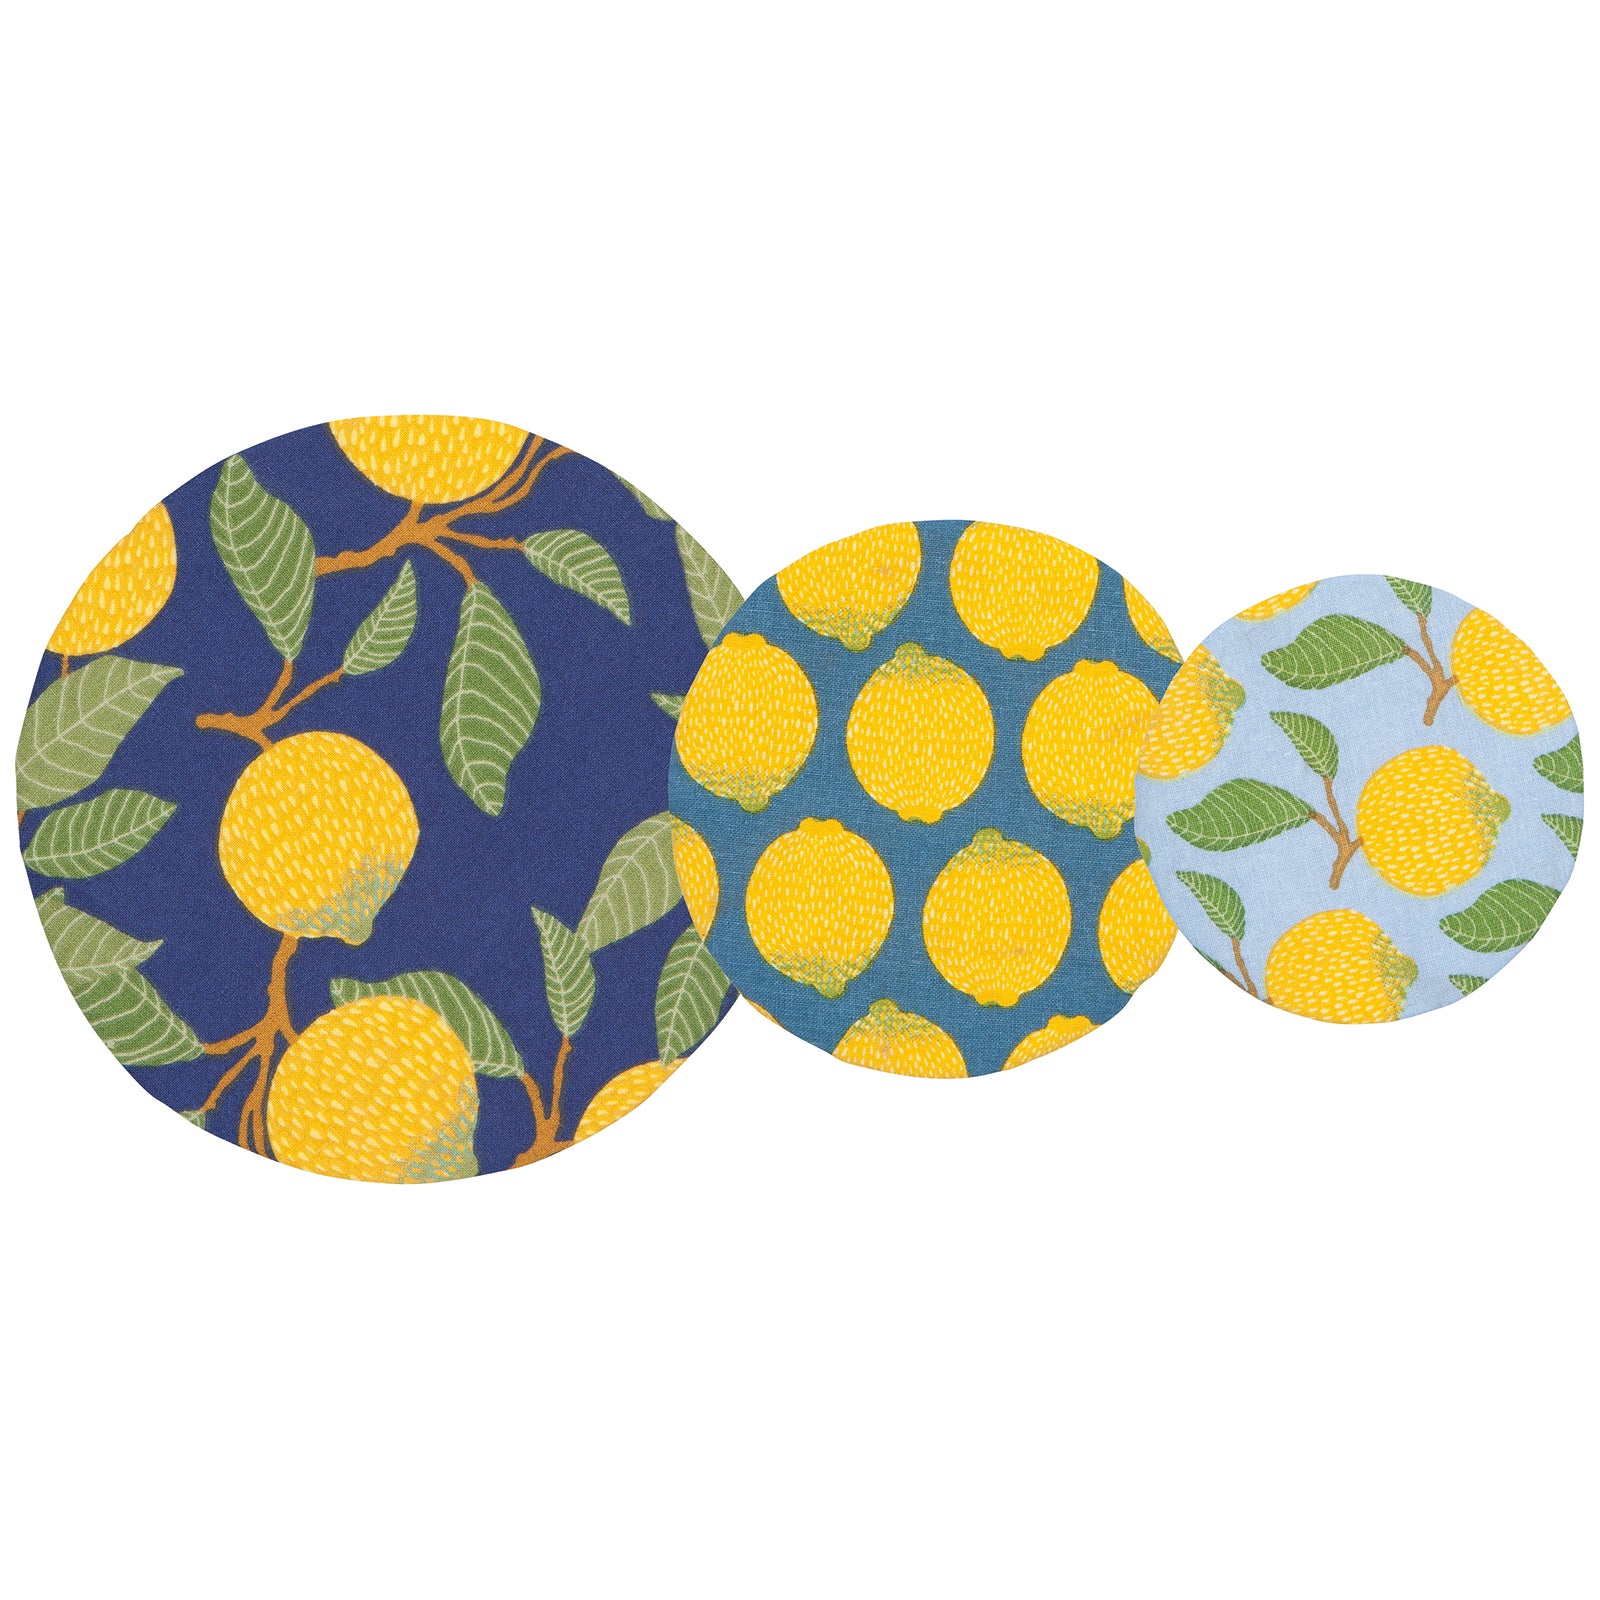 Bowl Covers Mini: Set of Three - Lemons Danica - Oscar & Libby's